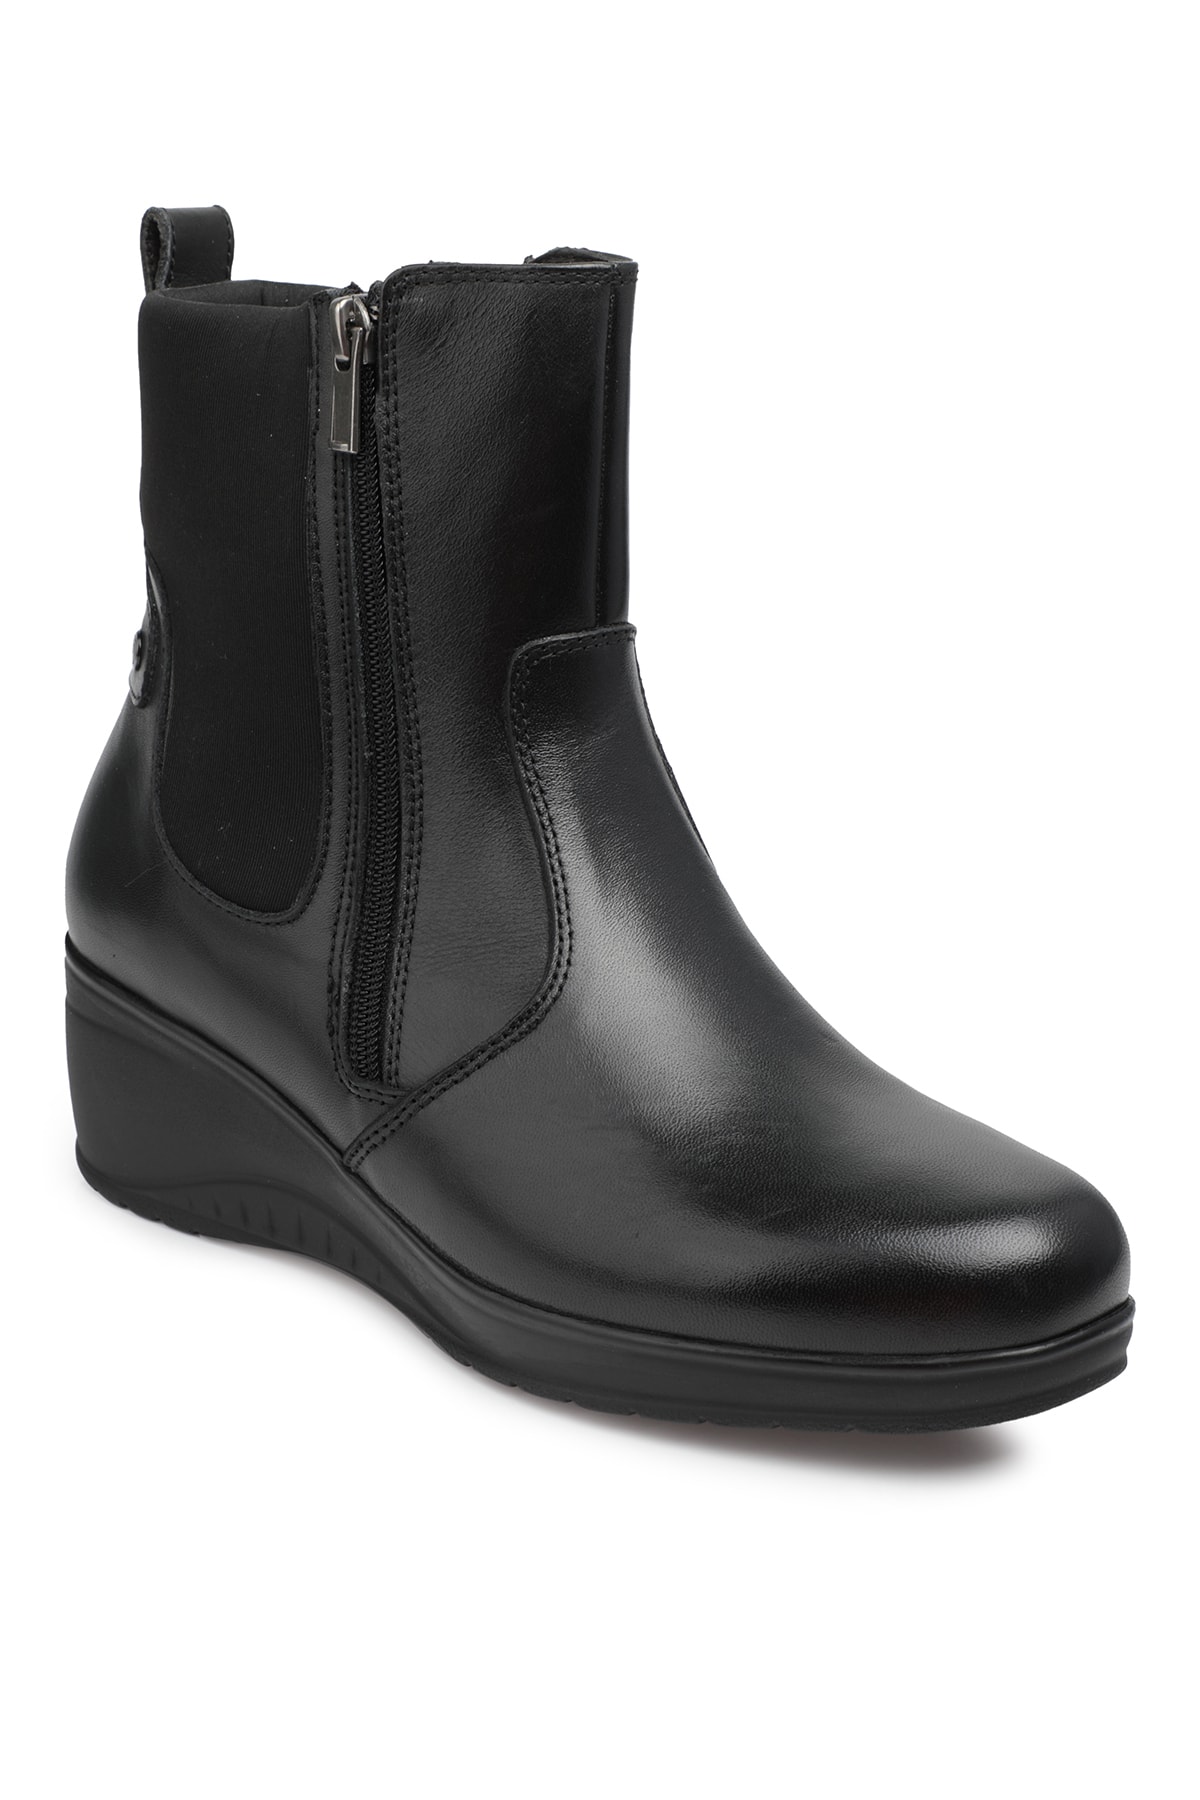 Levně Forelli Coral-g Women's Boots Black